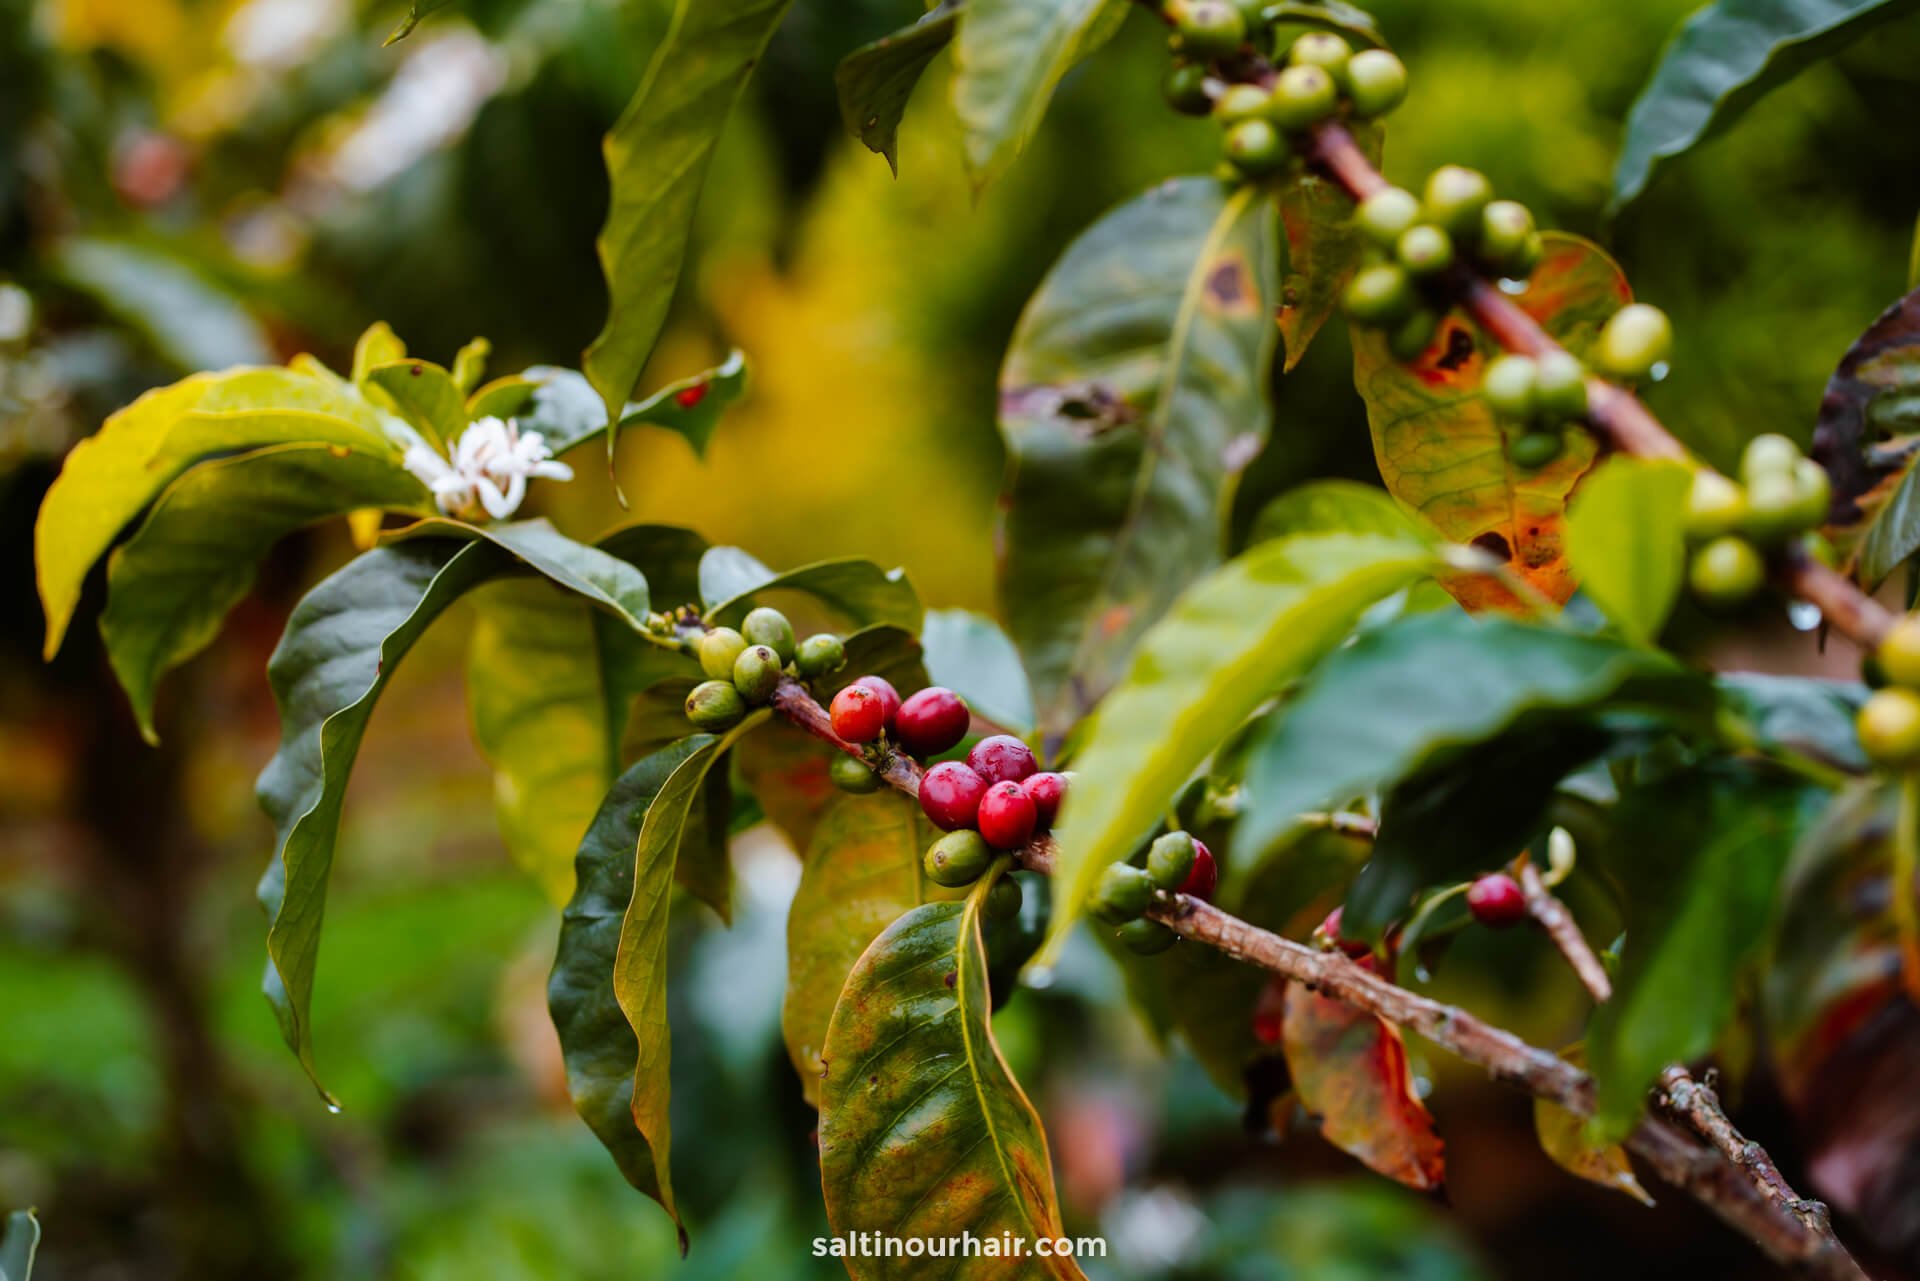 coffee plantation